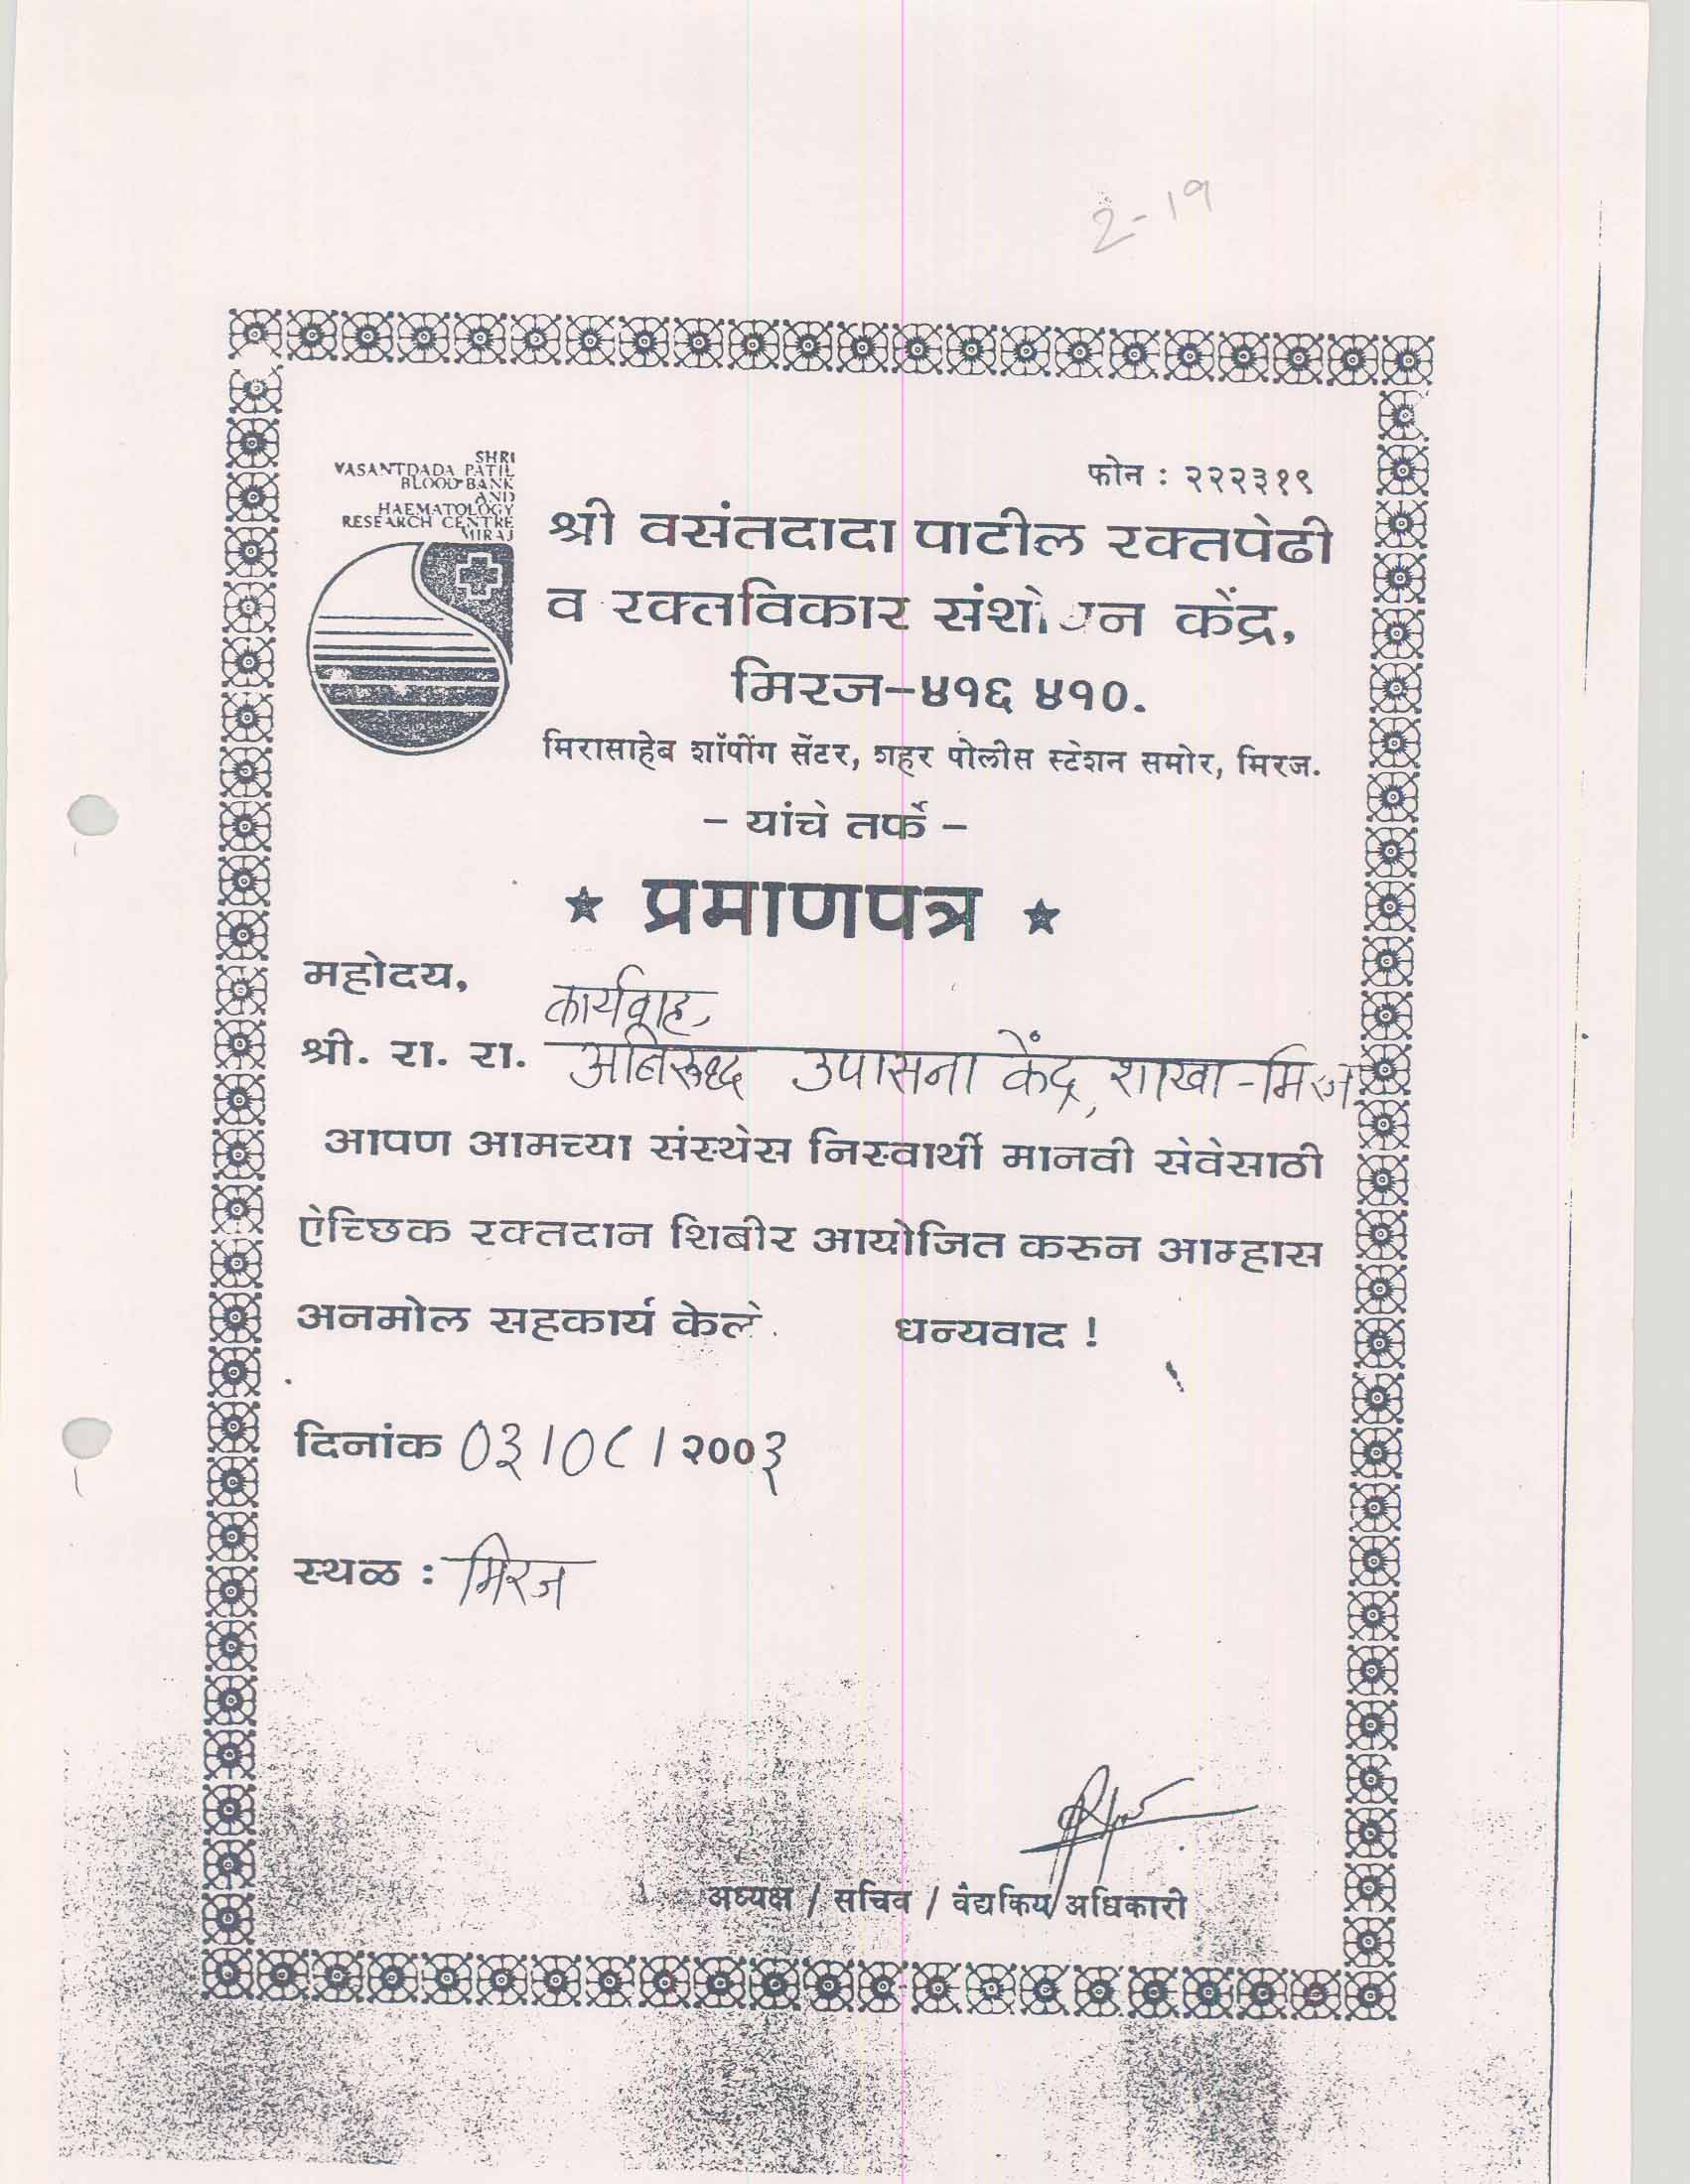 Appreciation-Letter from Vasantdada Patil Blood Bank2 2003-for-Aniruddhafoundation-Compassion-Social-services